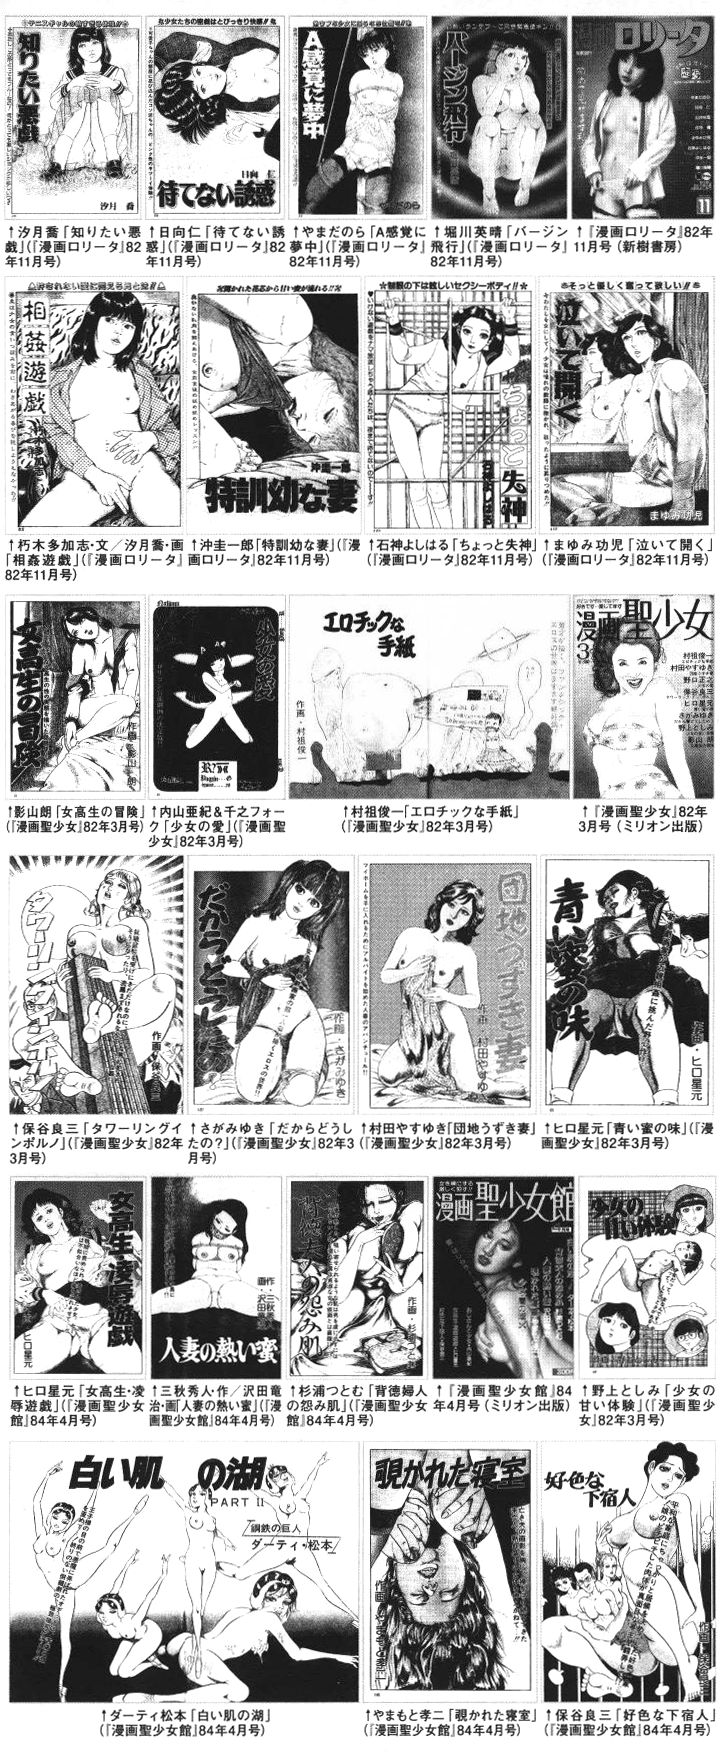 Postwar_35_03_Manga_Lolita_1982_Nov_Manga_Sei_Shoujo_1982_Mar_and_Manga_Sei_Shoujo_Kan_1984_Ap...png